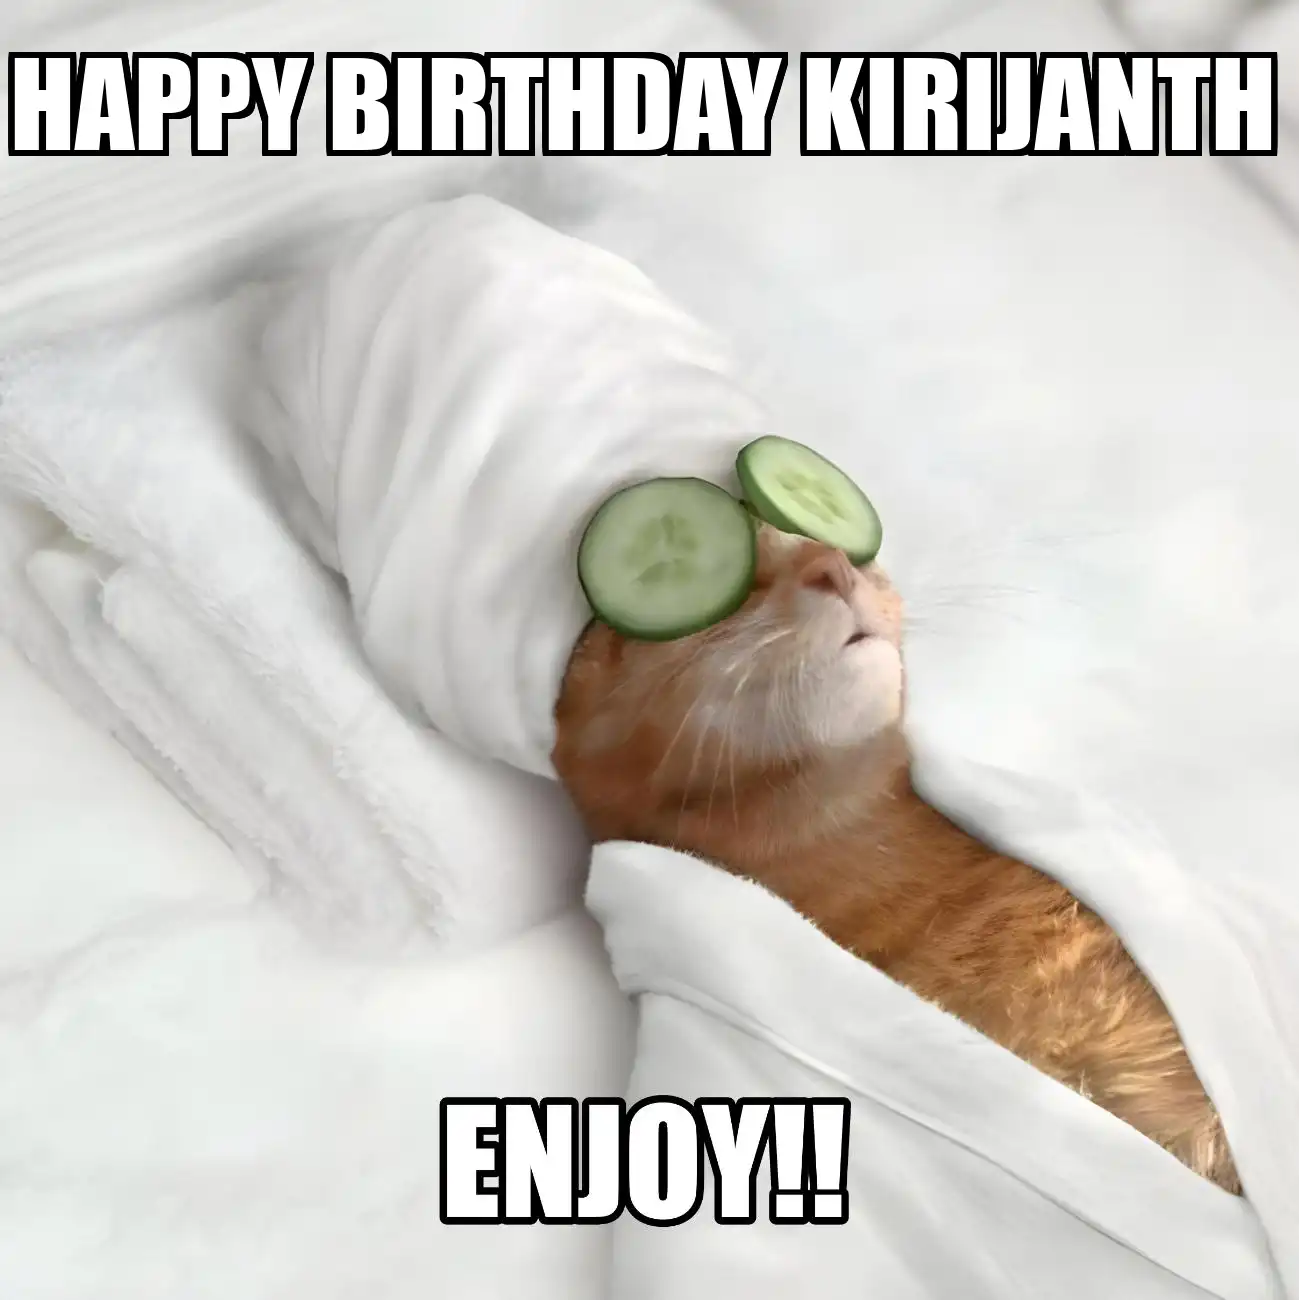 Happy Birthday Kirijanth Enjoy Cat Meme